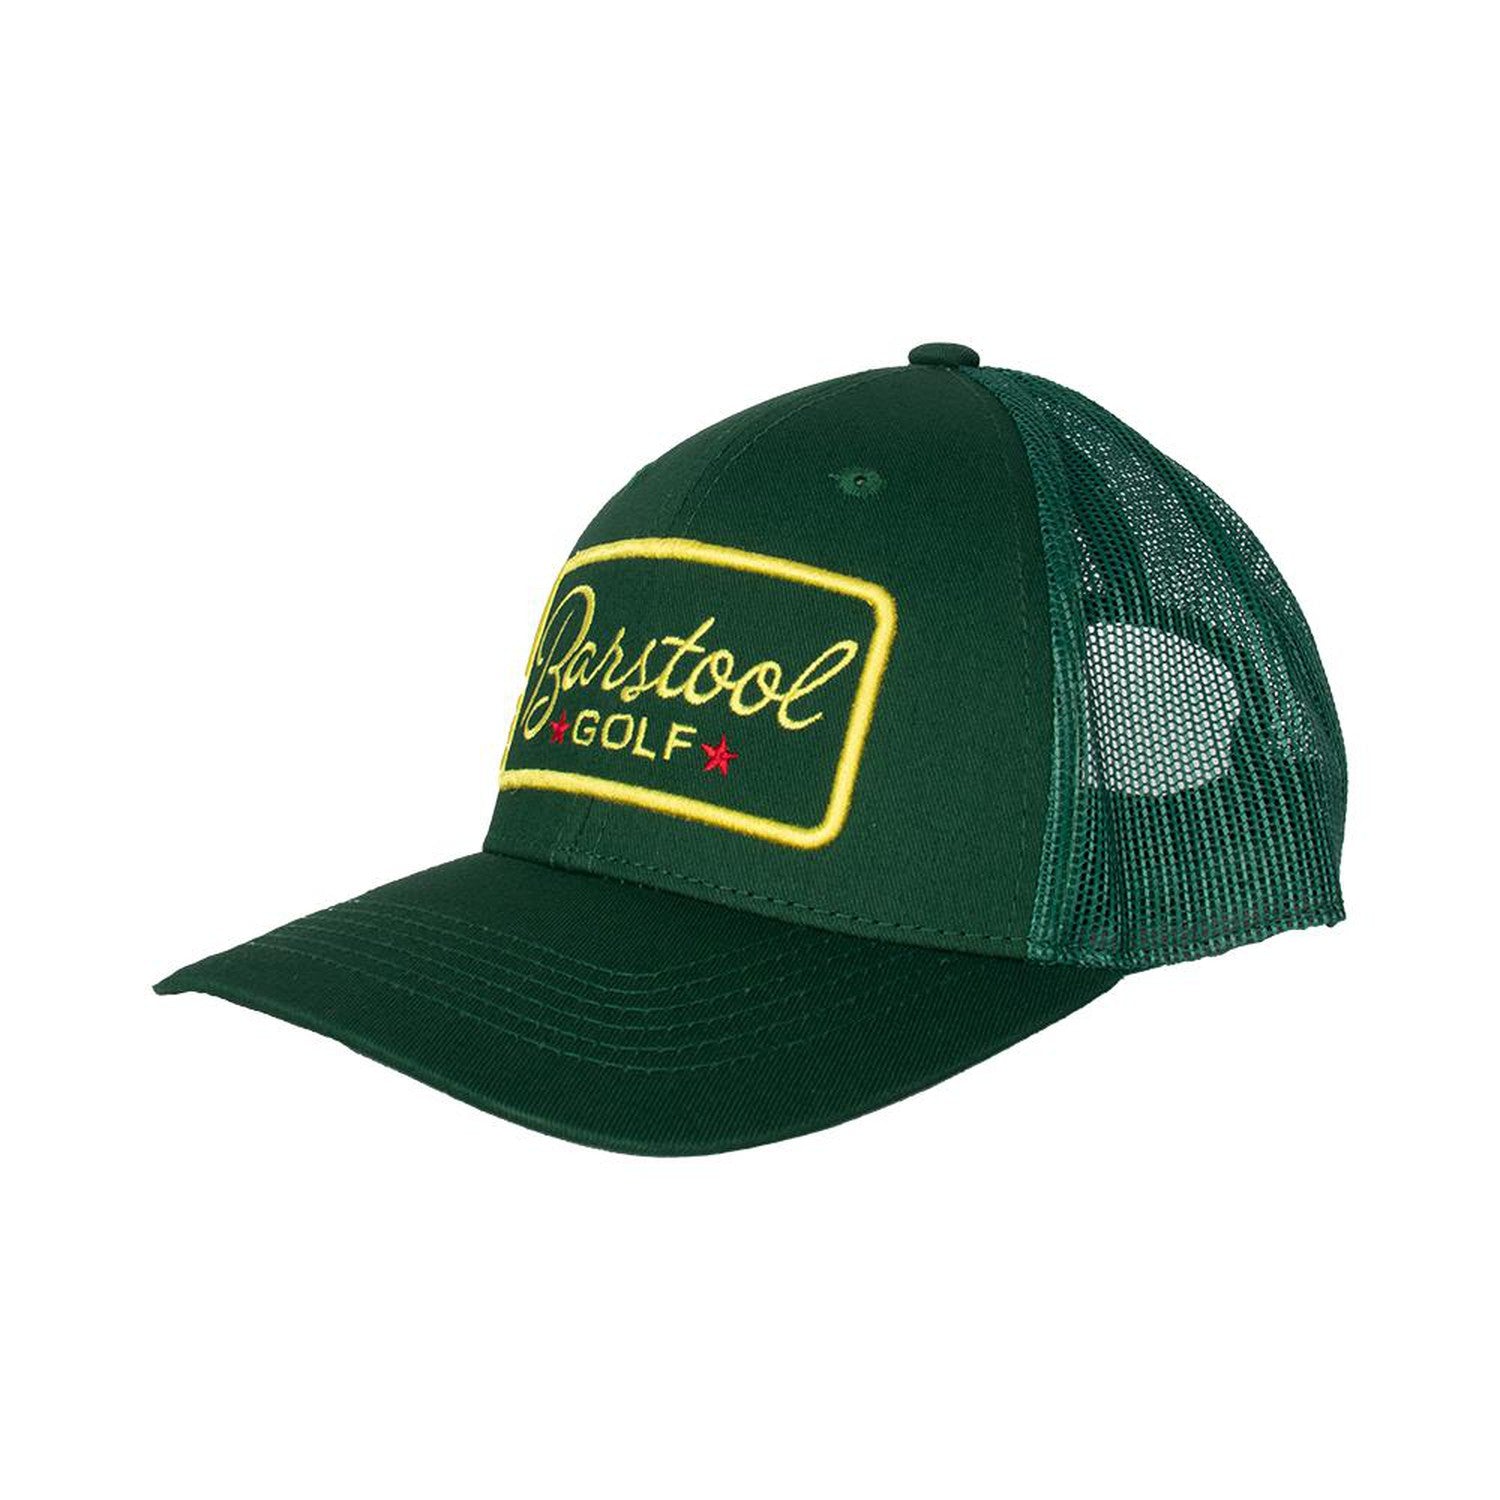 Barstool Golf Trucker Hat II